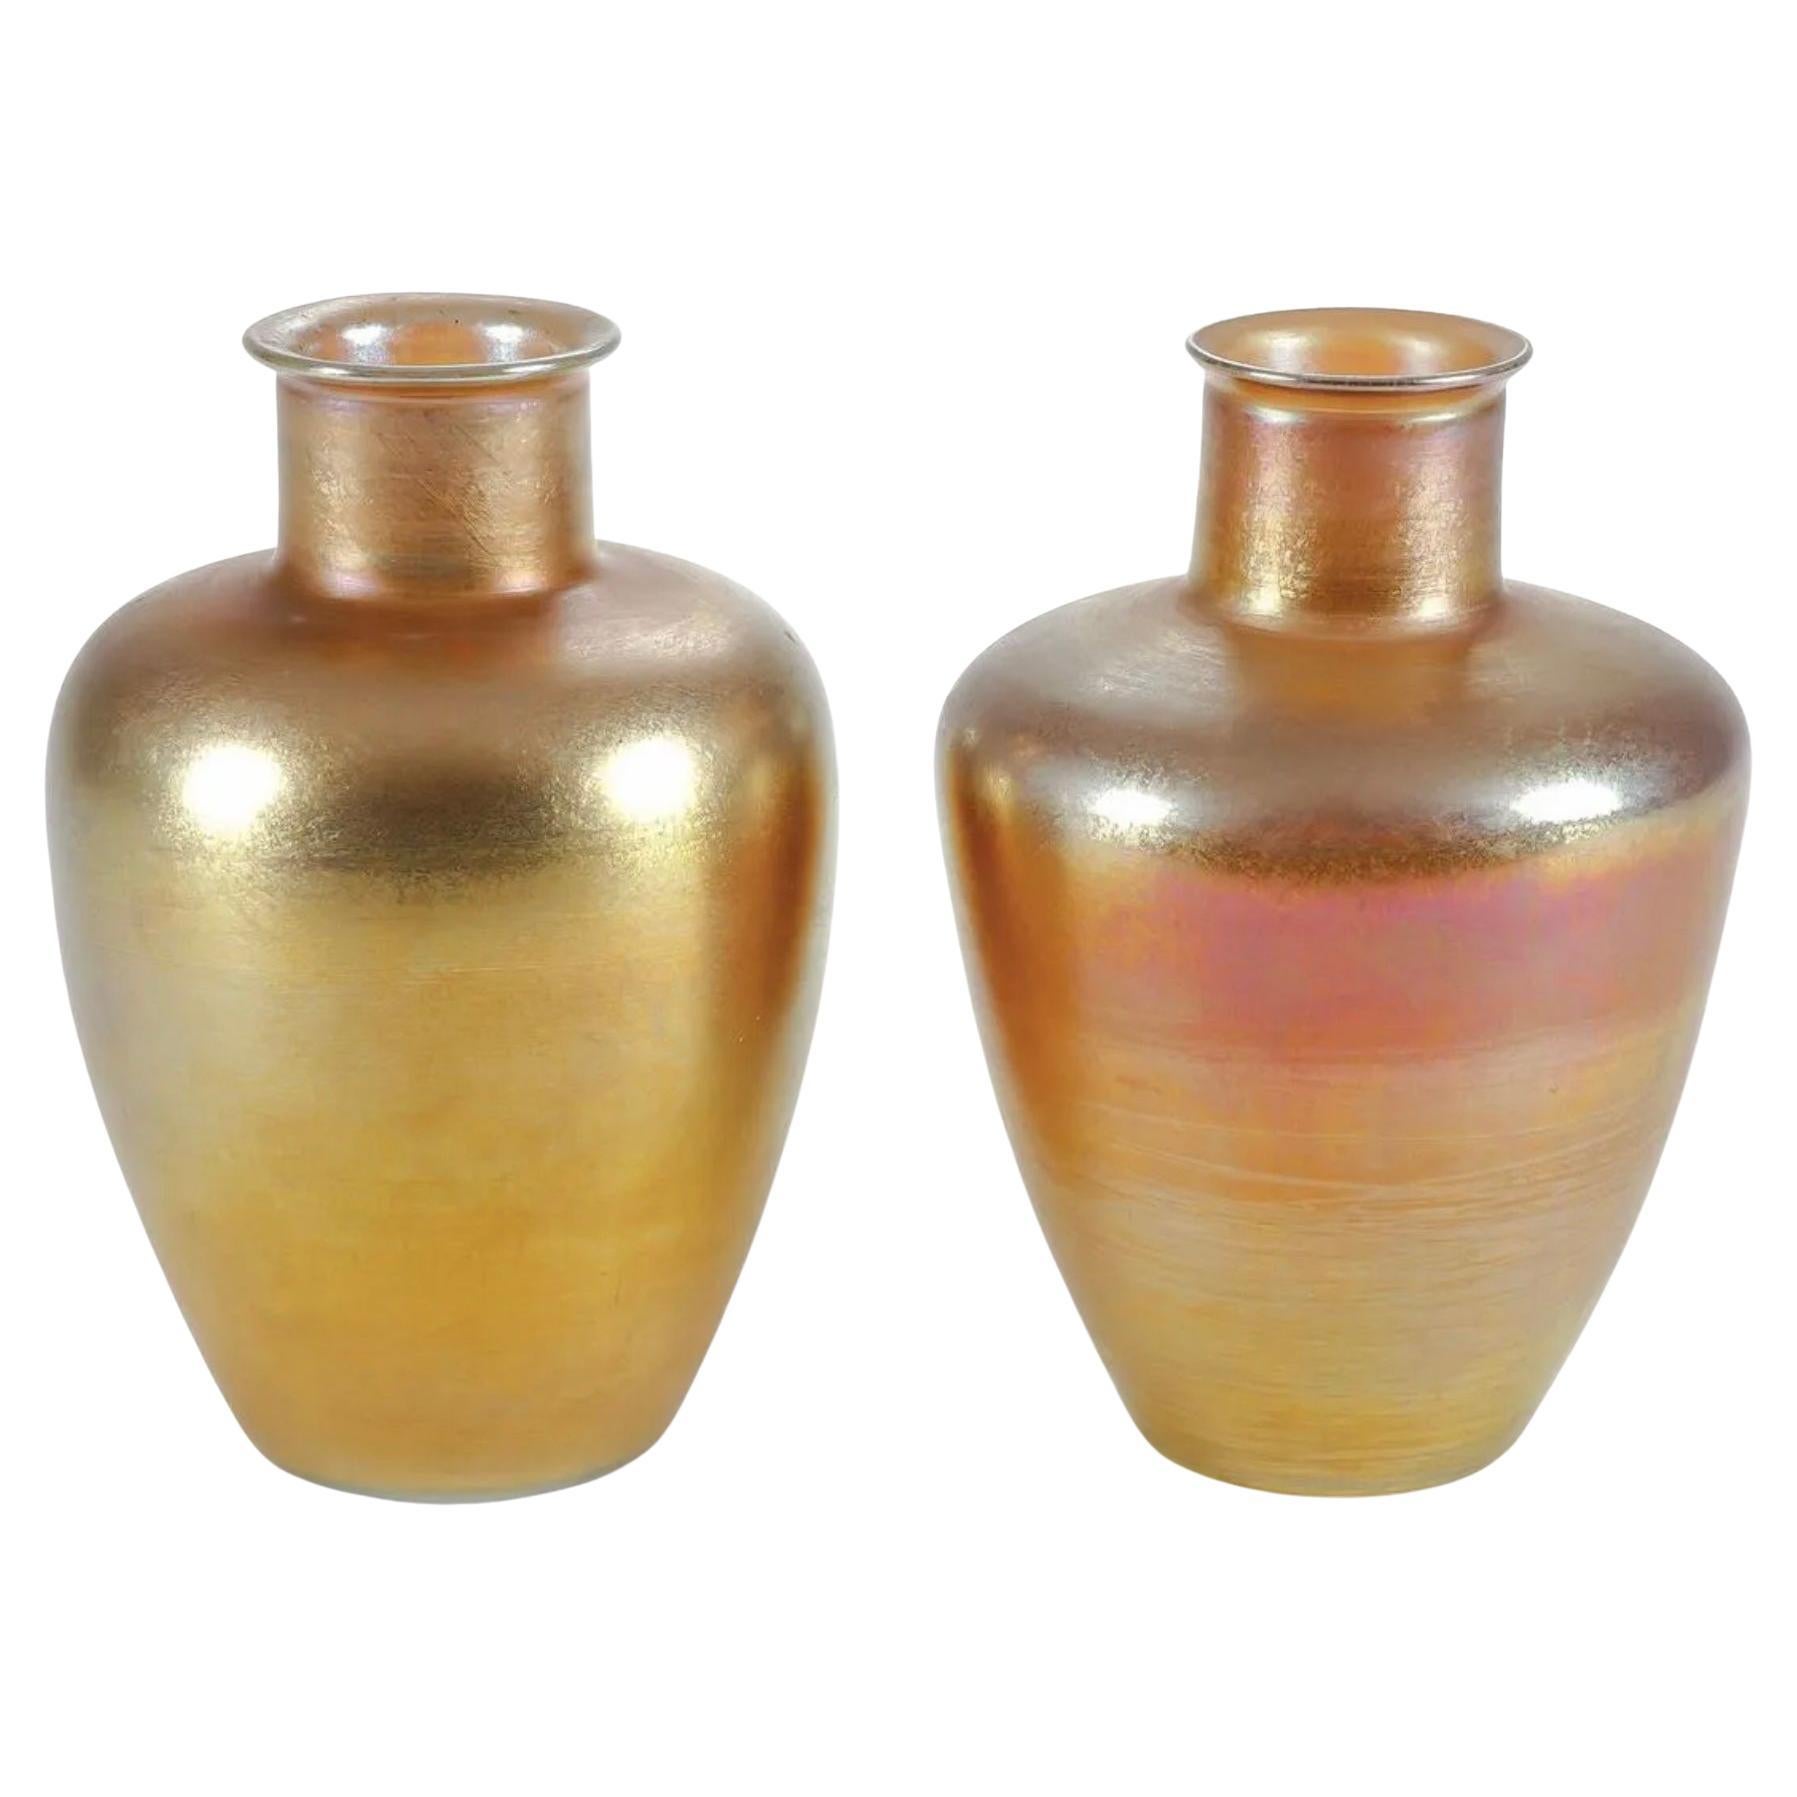 Louis Comfort Tiffany Studios Favrile Vases